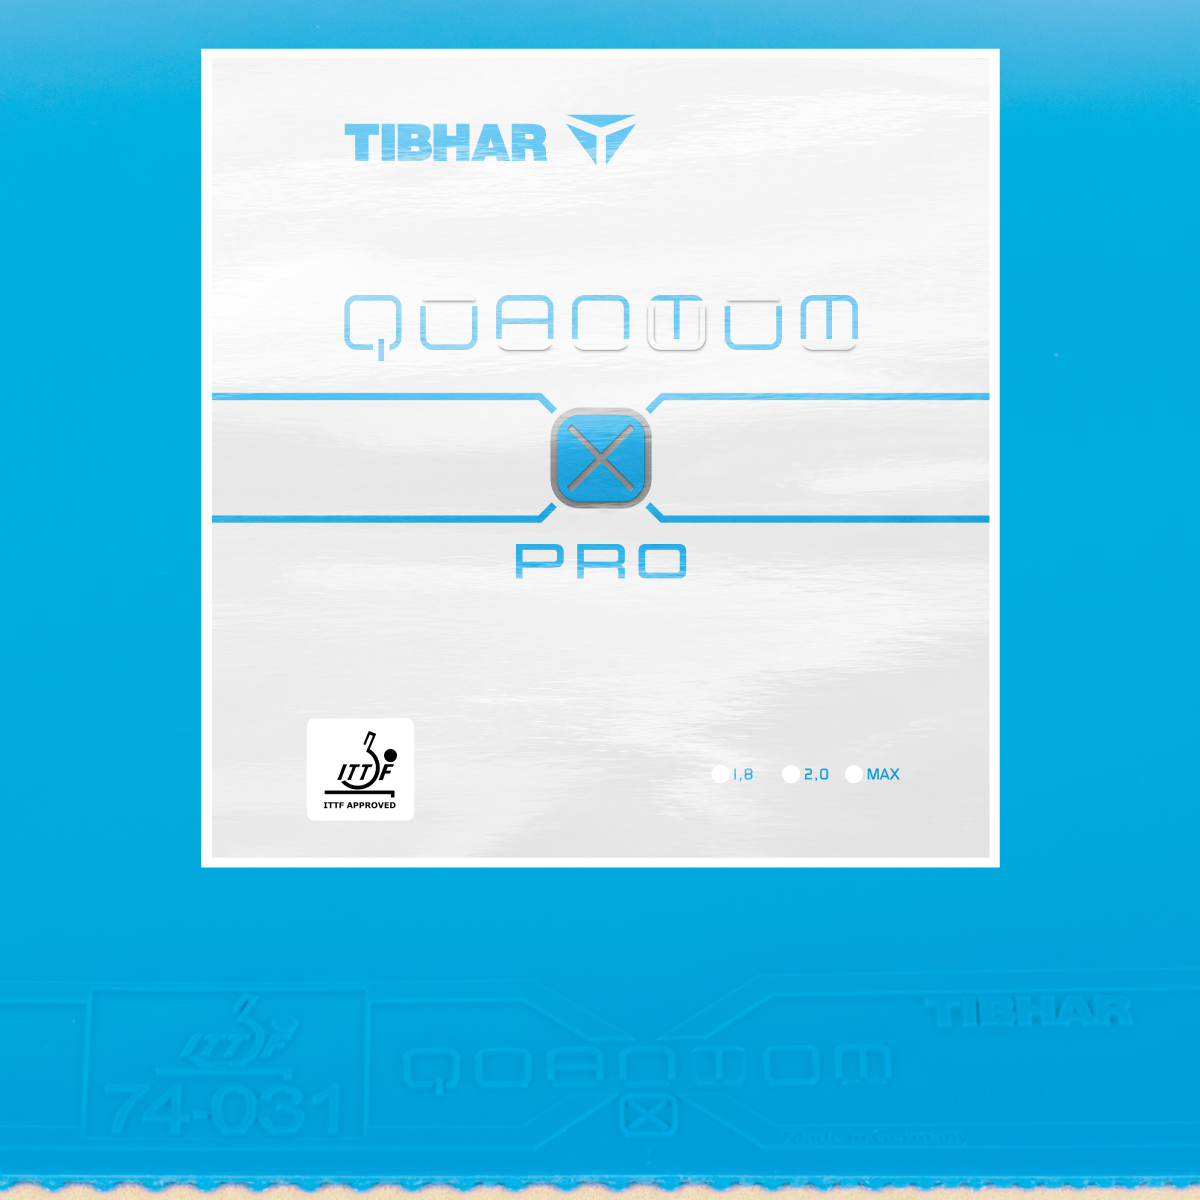 TIBHAR QUANTUM X PRO TABLE TENNIS RUBBER - Bribar Table Tennis